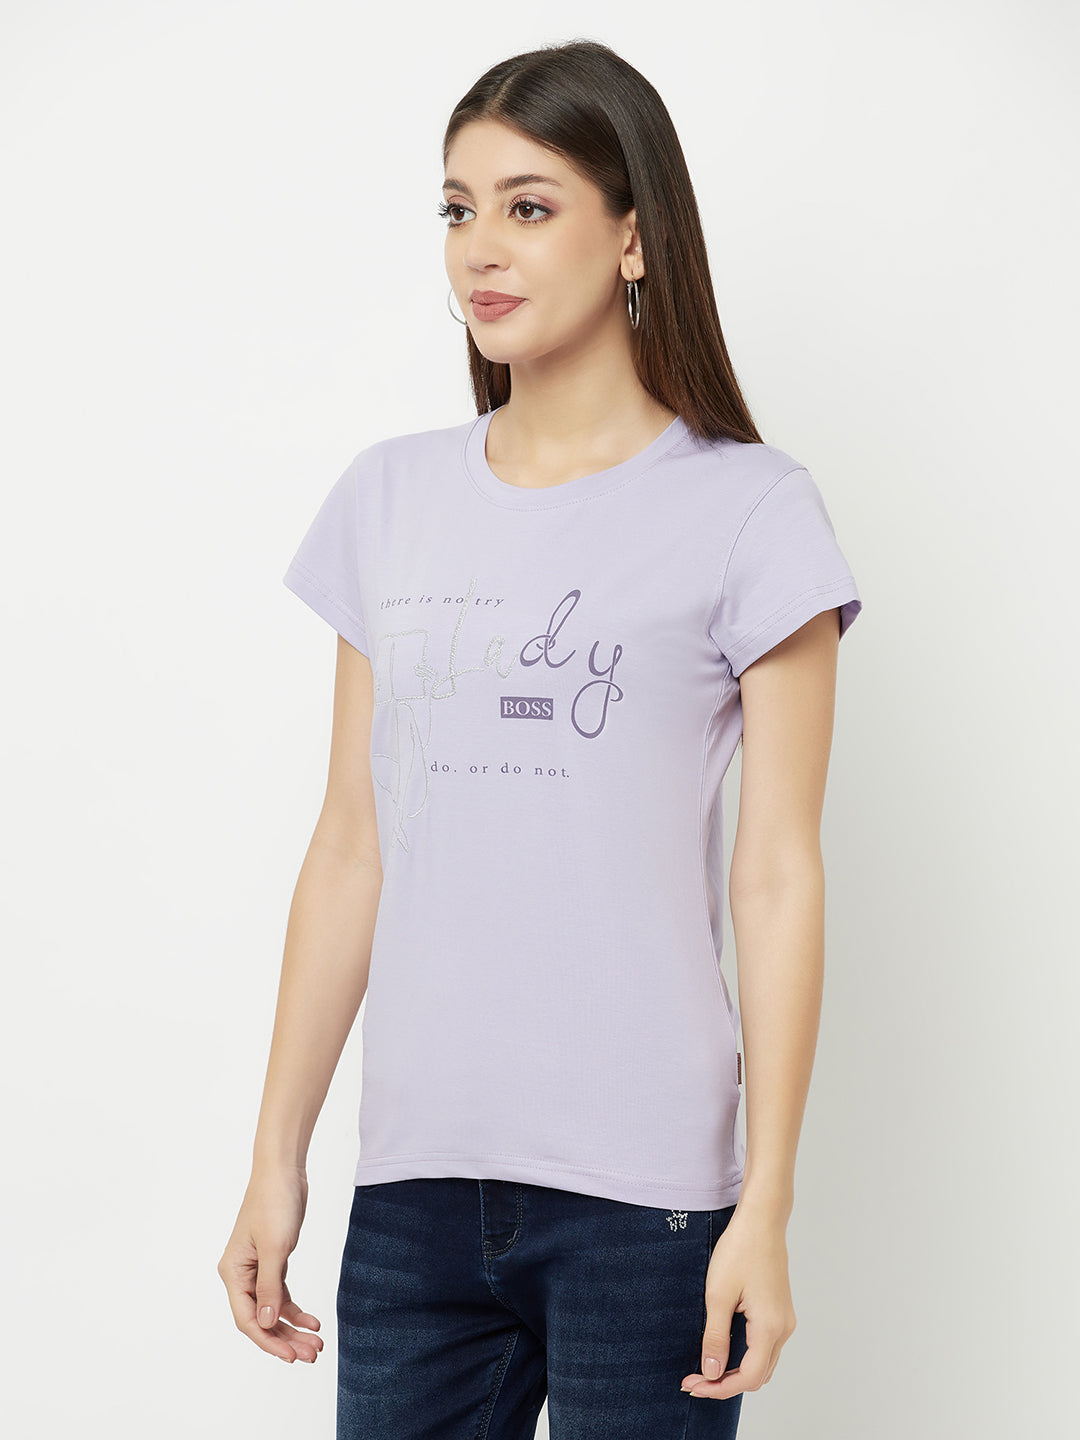 Purple Printed Round Neck T-Shirt - Women T-Shirts